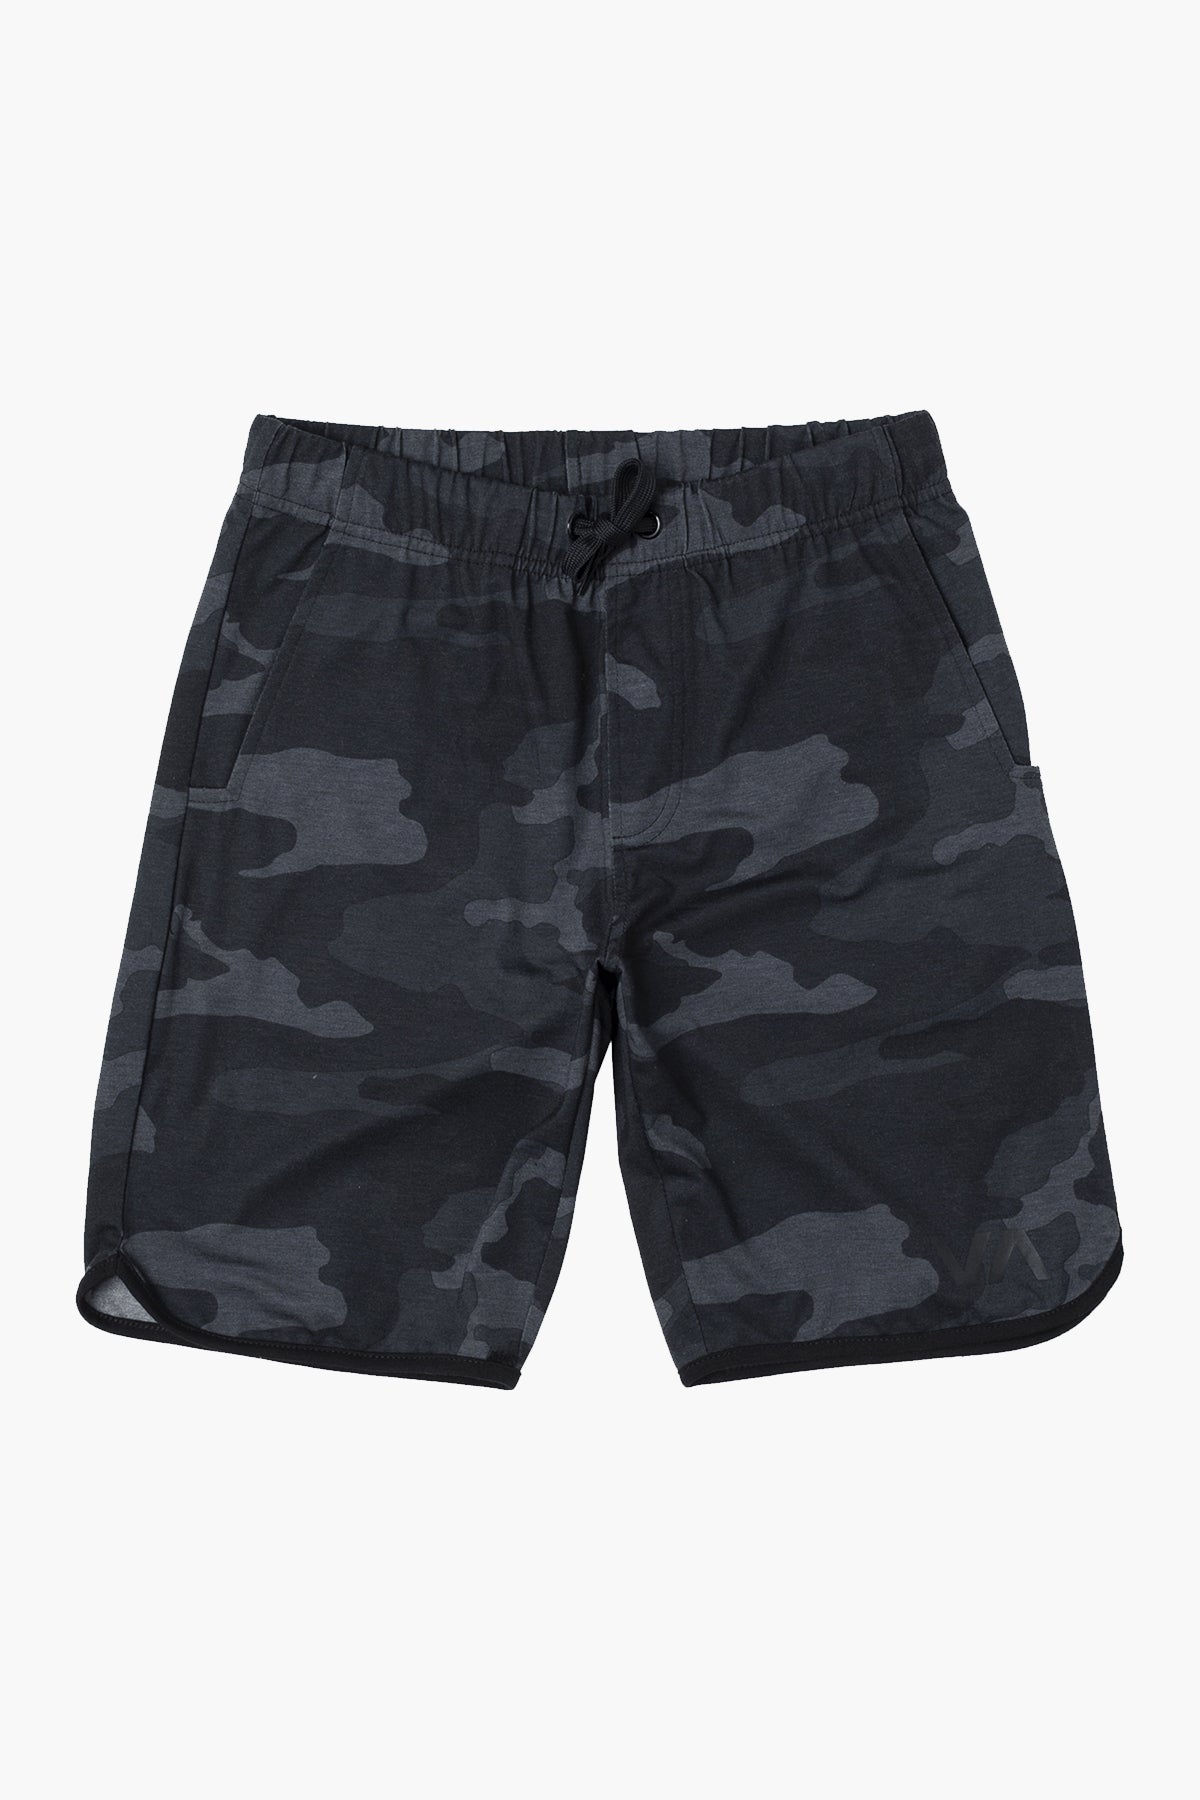 Men's Shorts - Cargo, Jersey and Running Shorts